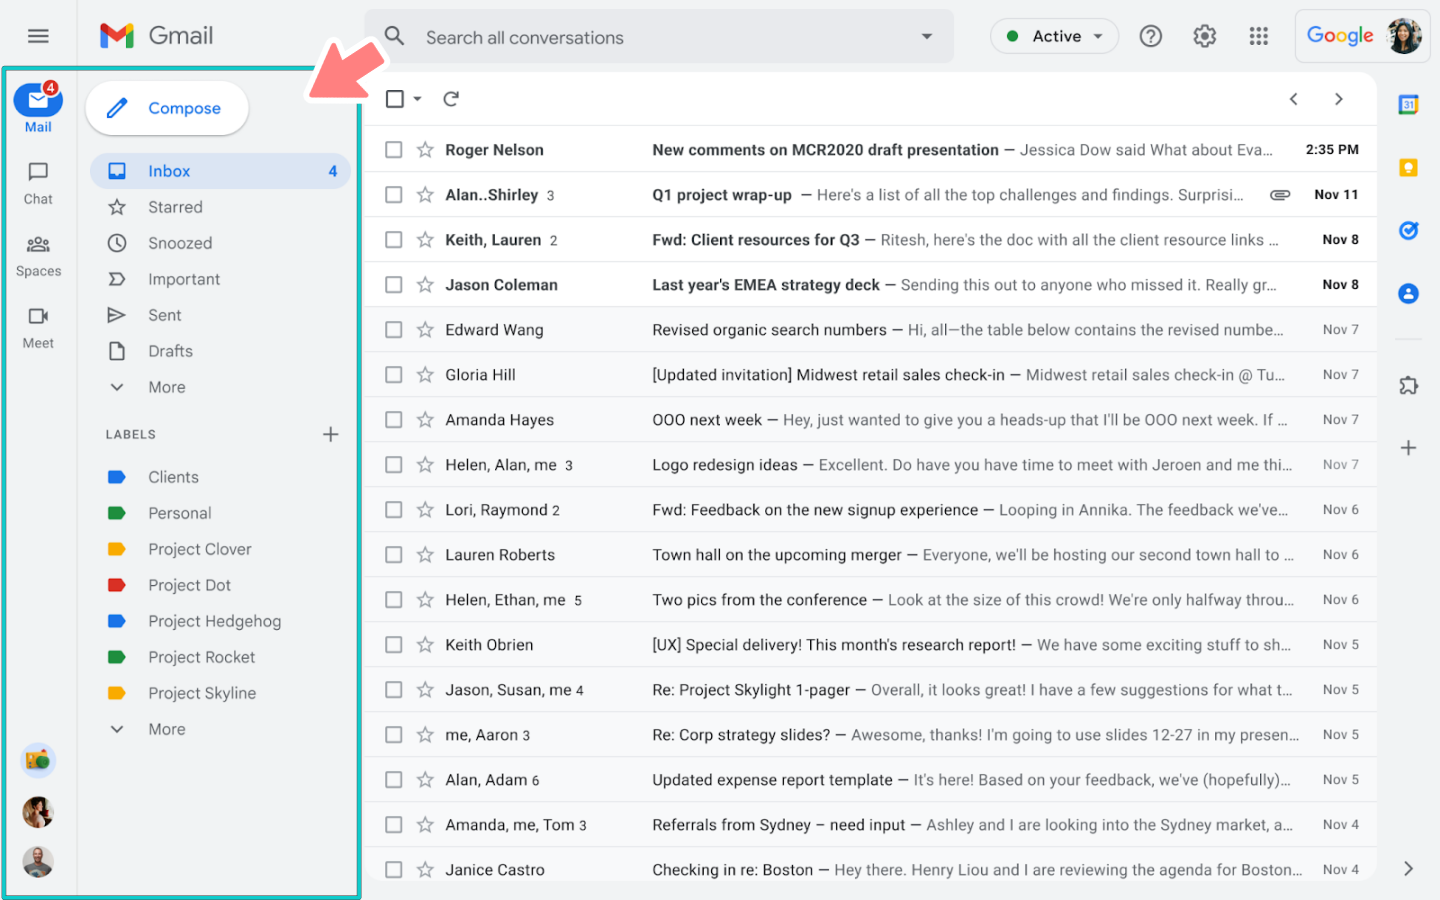 Gmail 網頁版推出更新！新增功能列表 讓介面變得更簡潔 